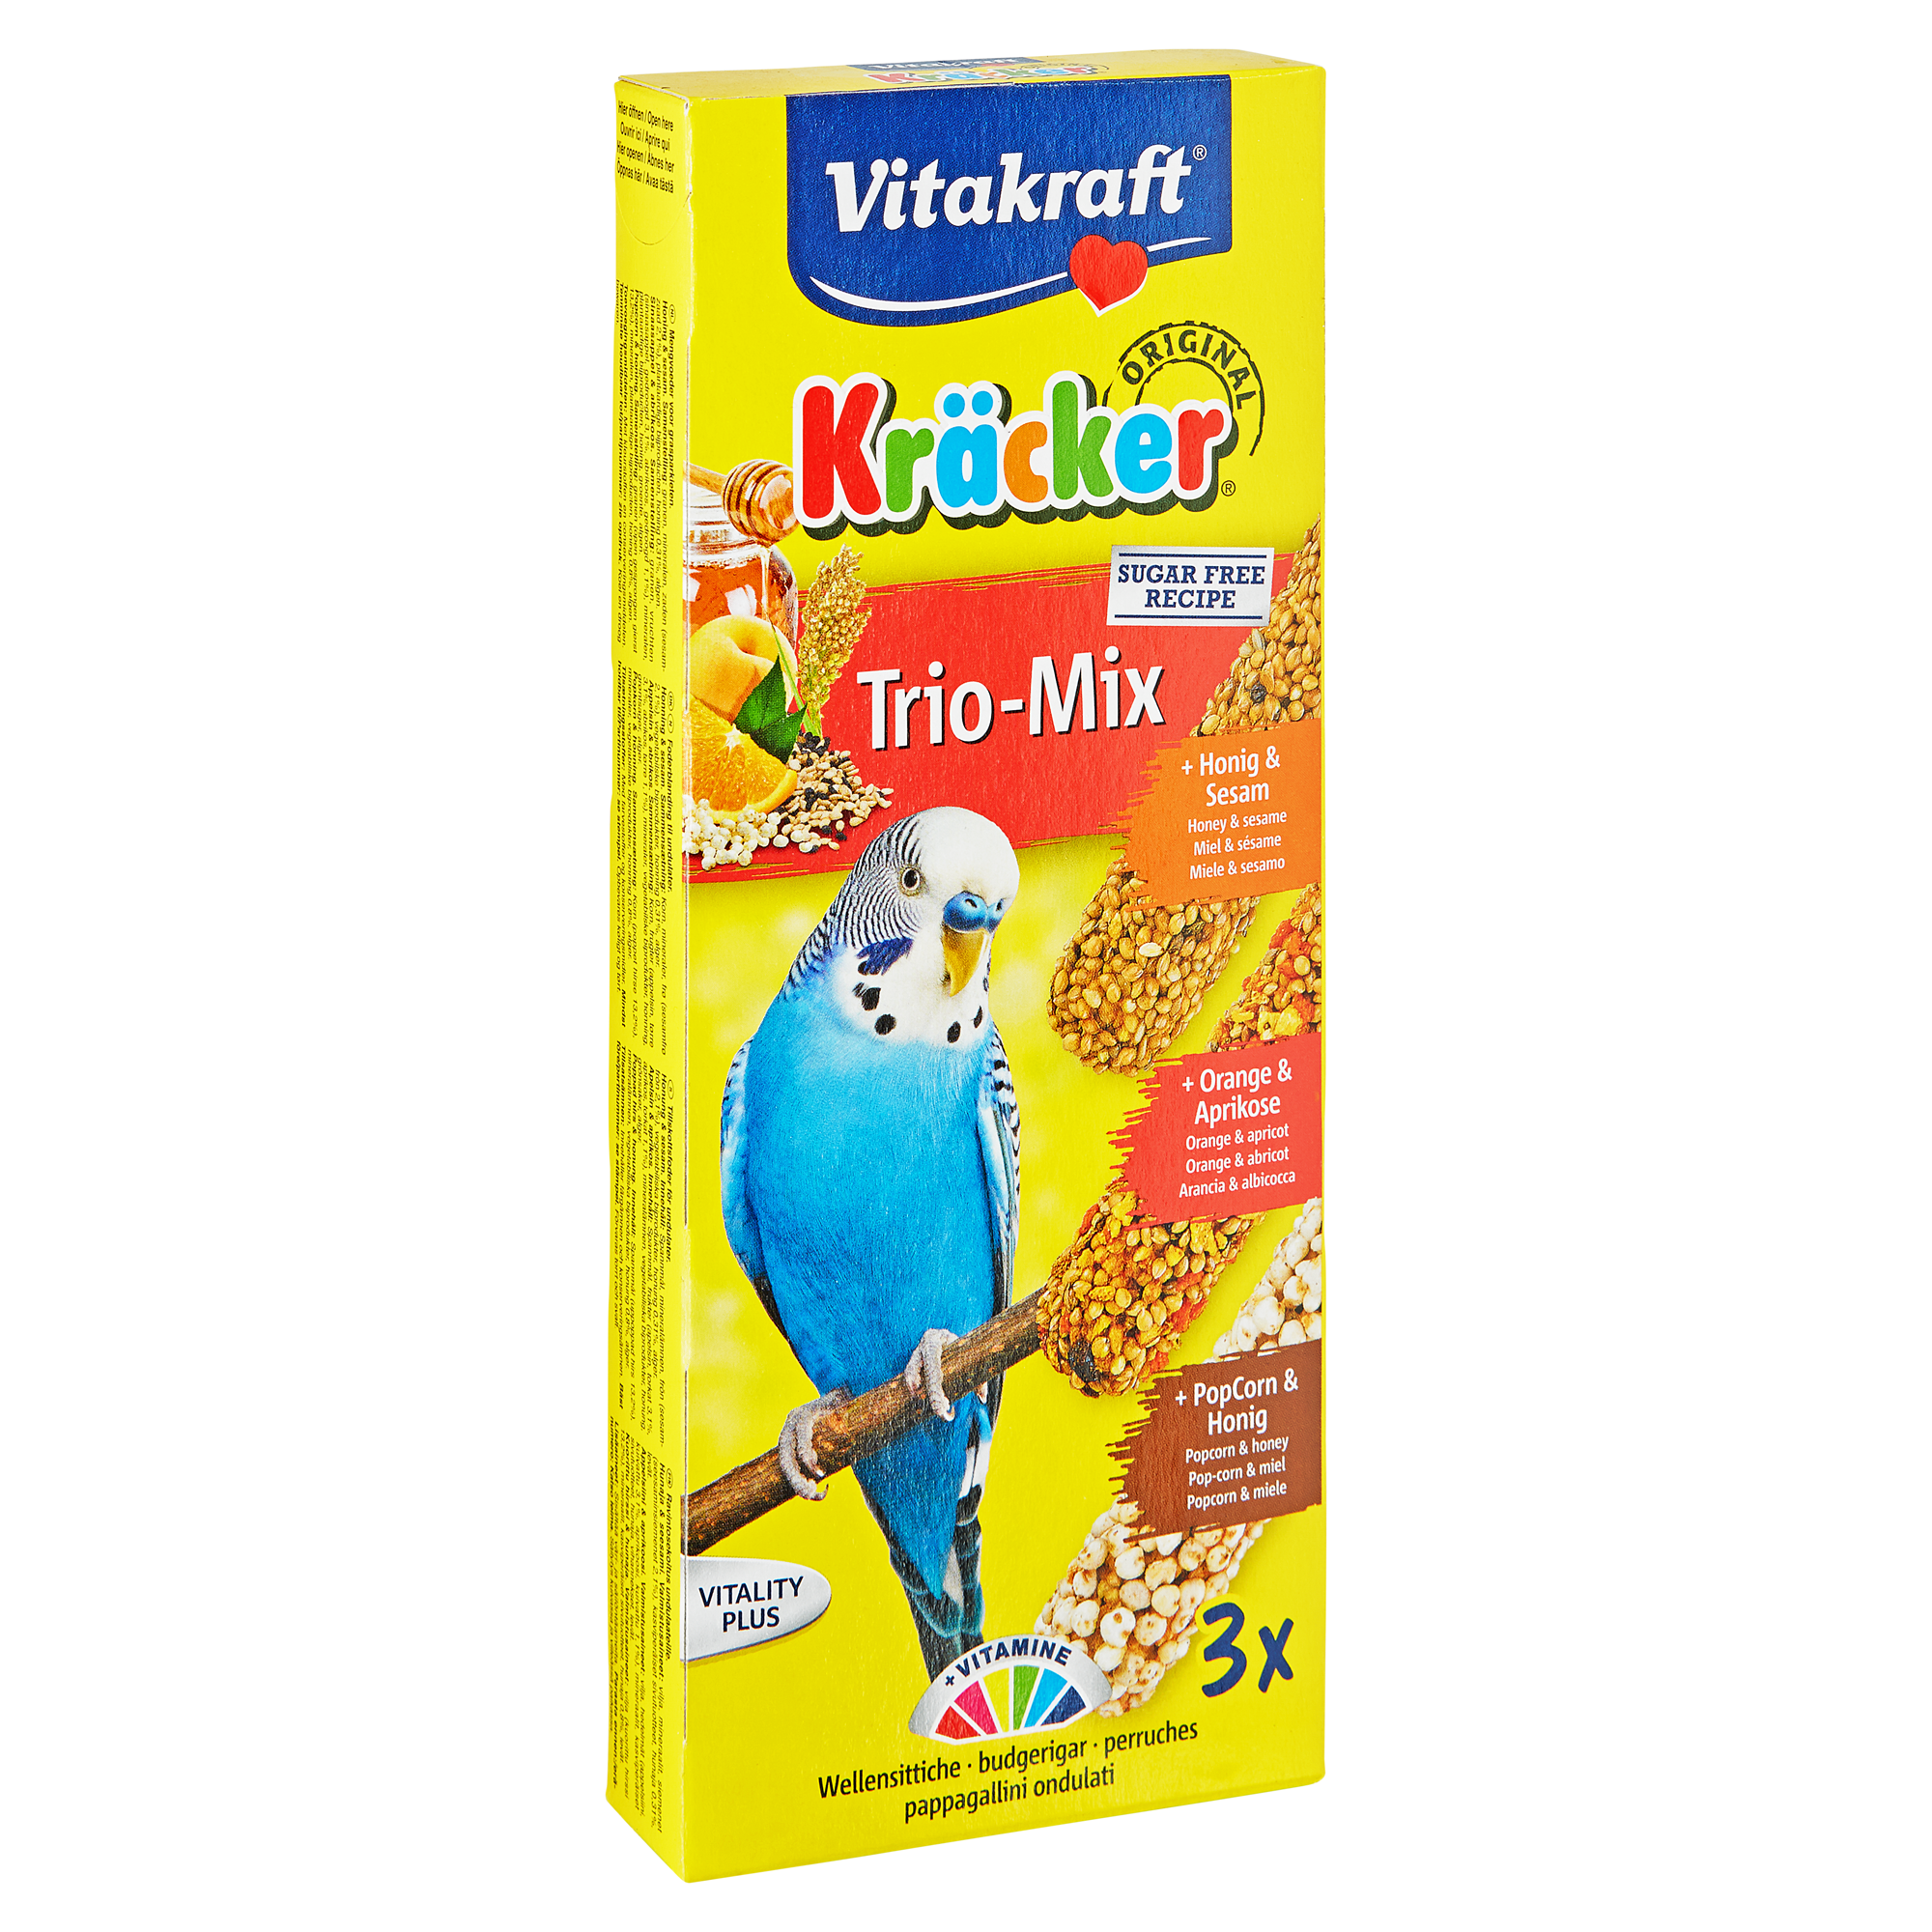 Sittichfutter "Kräcker® Original" Trio-Mix 80 g Honig/Sesam Orange/Aprikose PopCorn/Honig + product picture